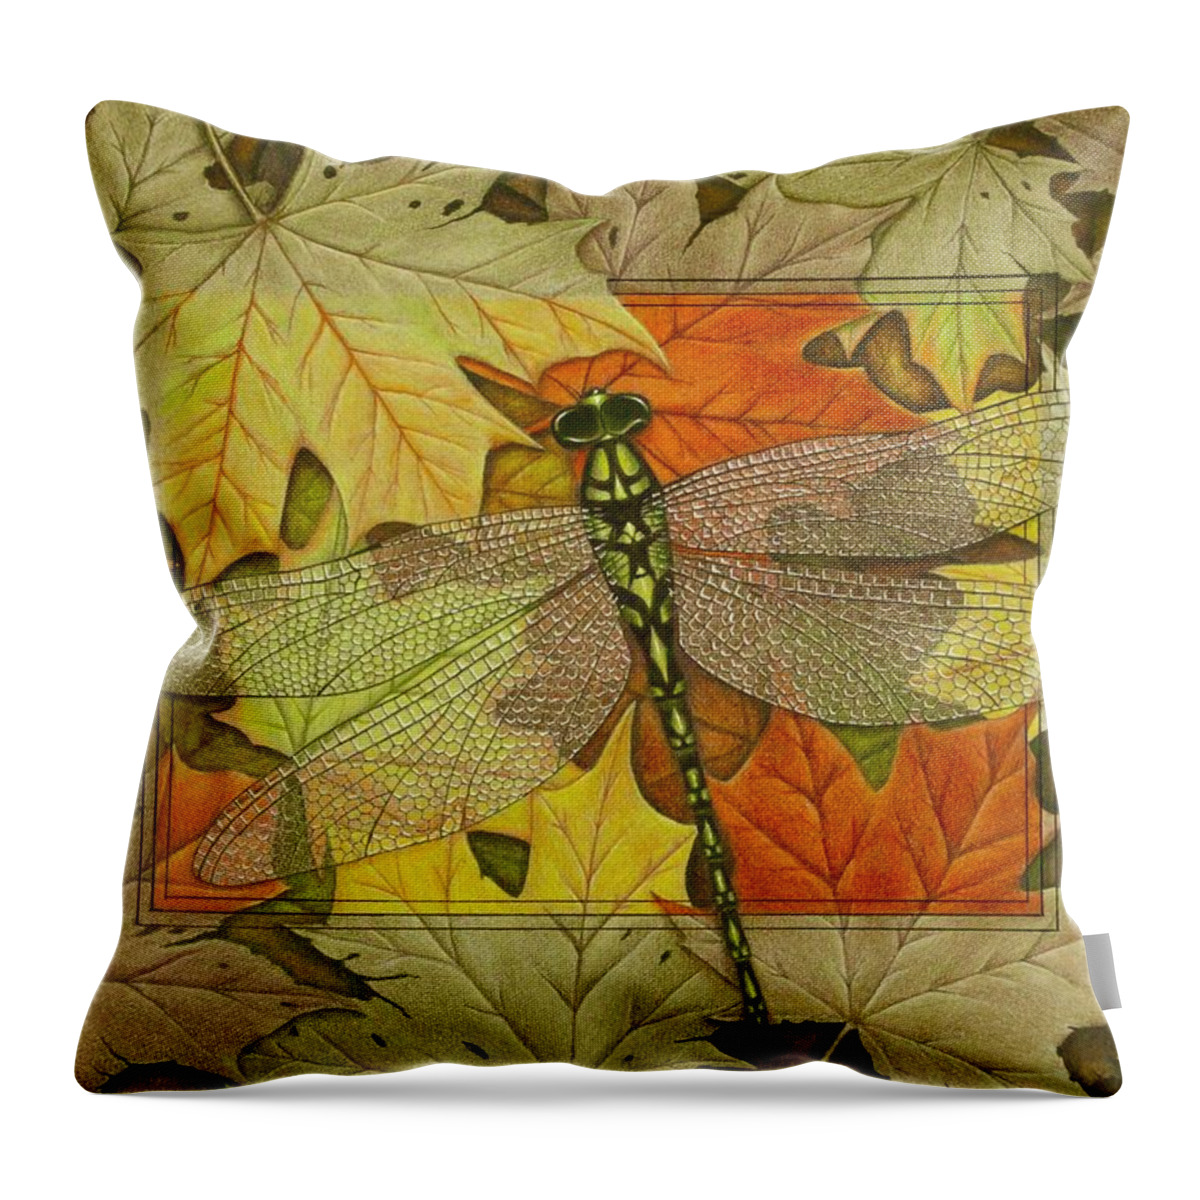 Kim Mcclinton Throw Pillow featuring the drawing Dragonfly Fall by Kim McClinton